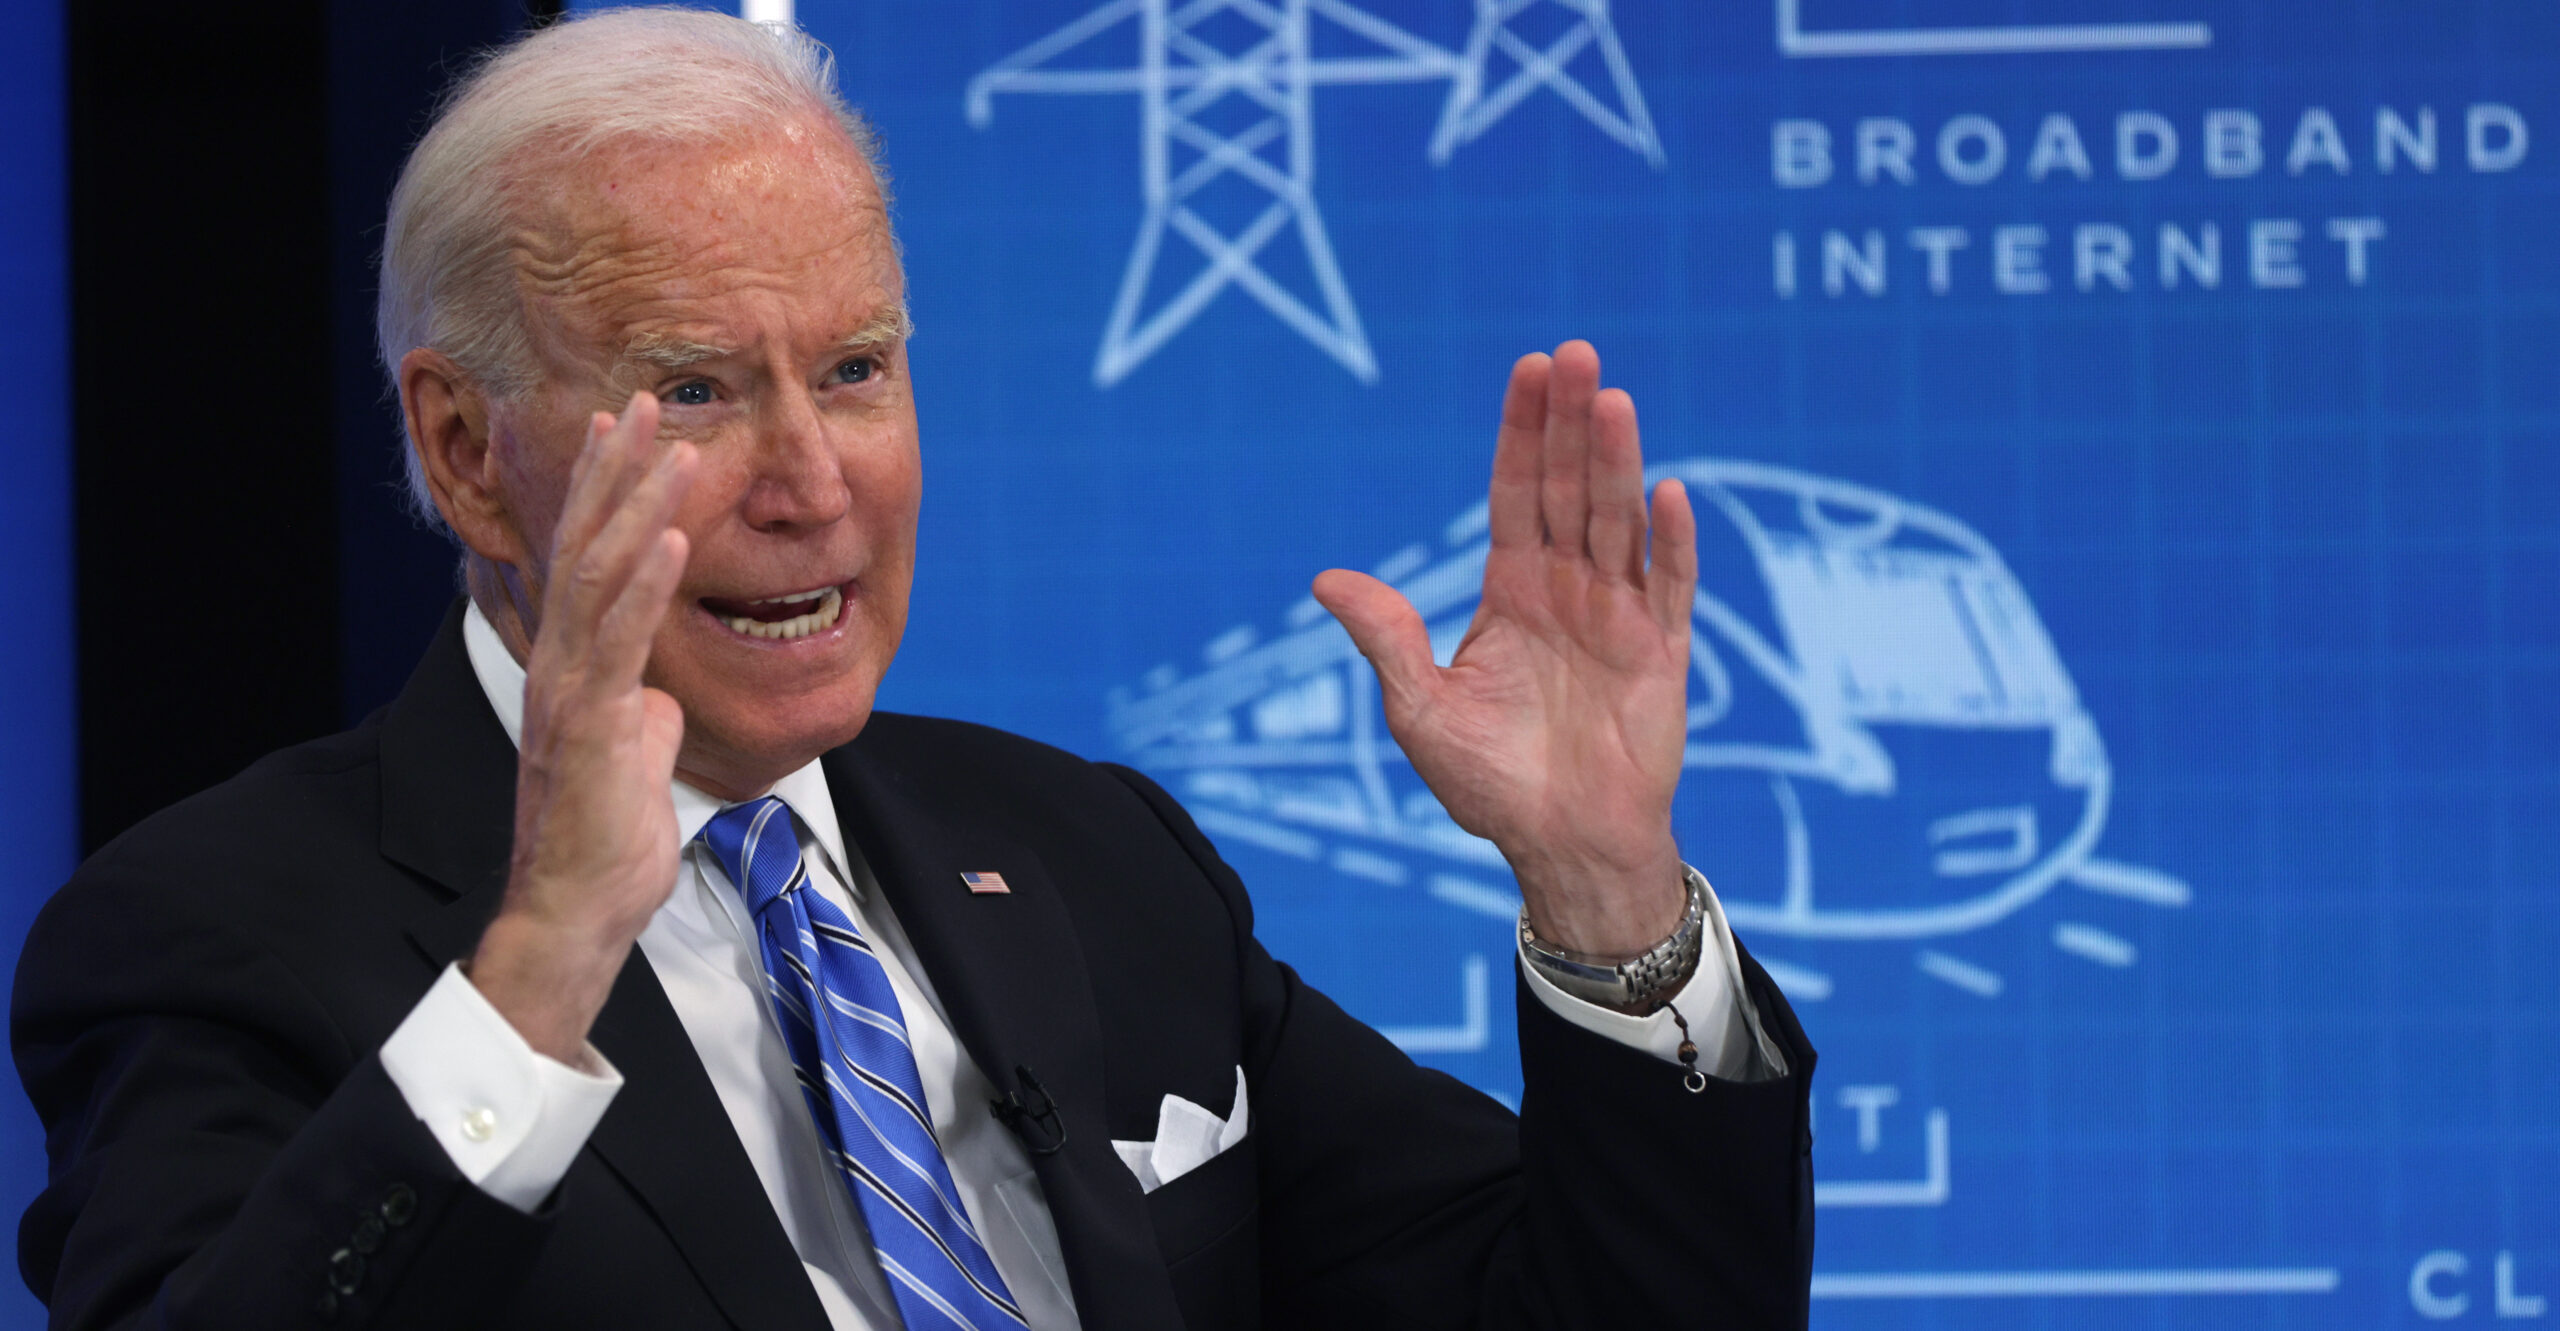 Biden's Broadband Plan Subsidizes Delaware, Mansions, Vacation Homes, Senate Panel Finds